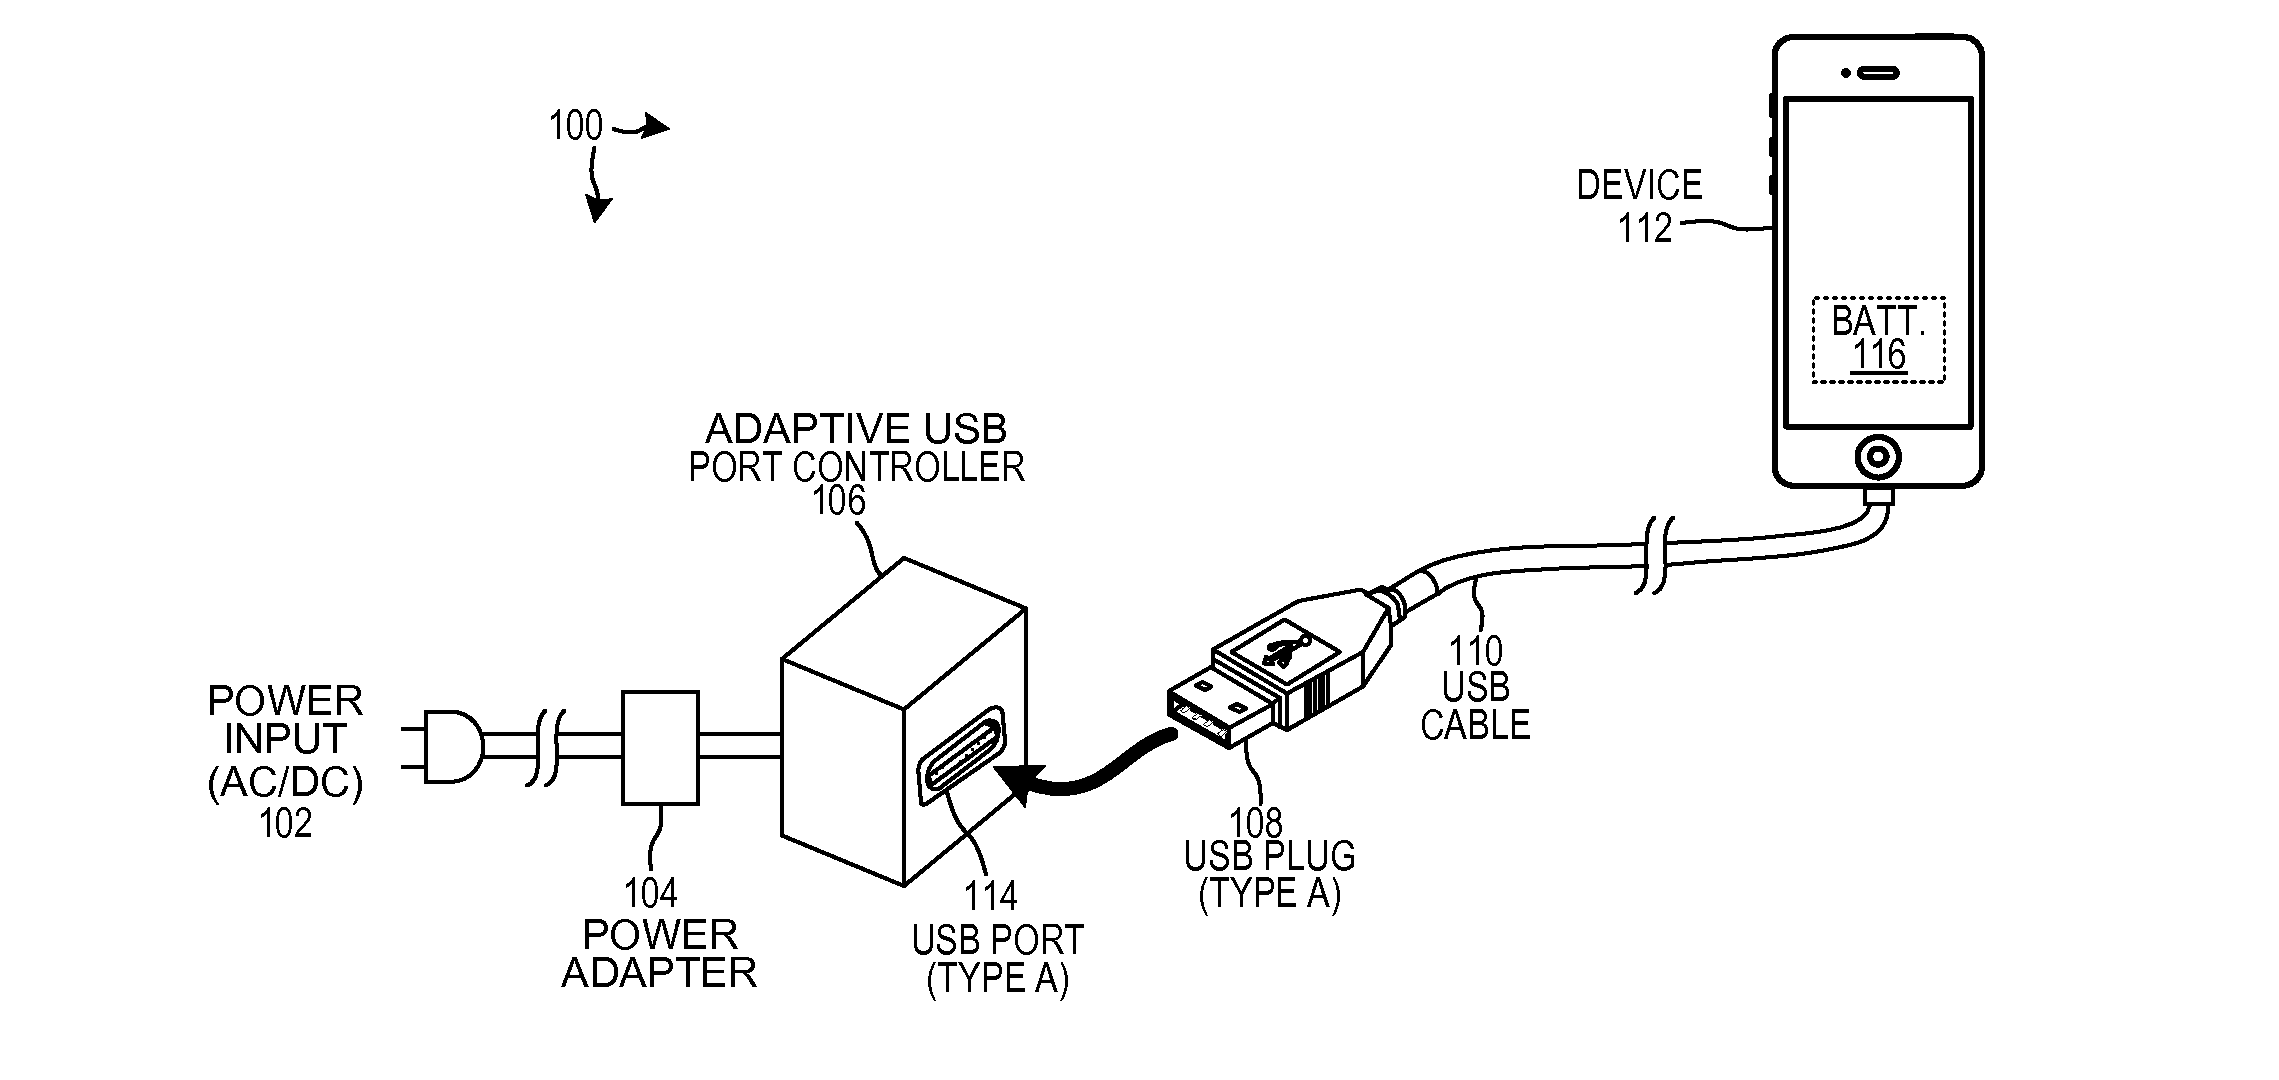 Adaptive USB Port Controller